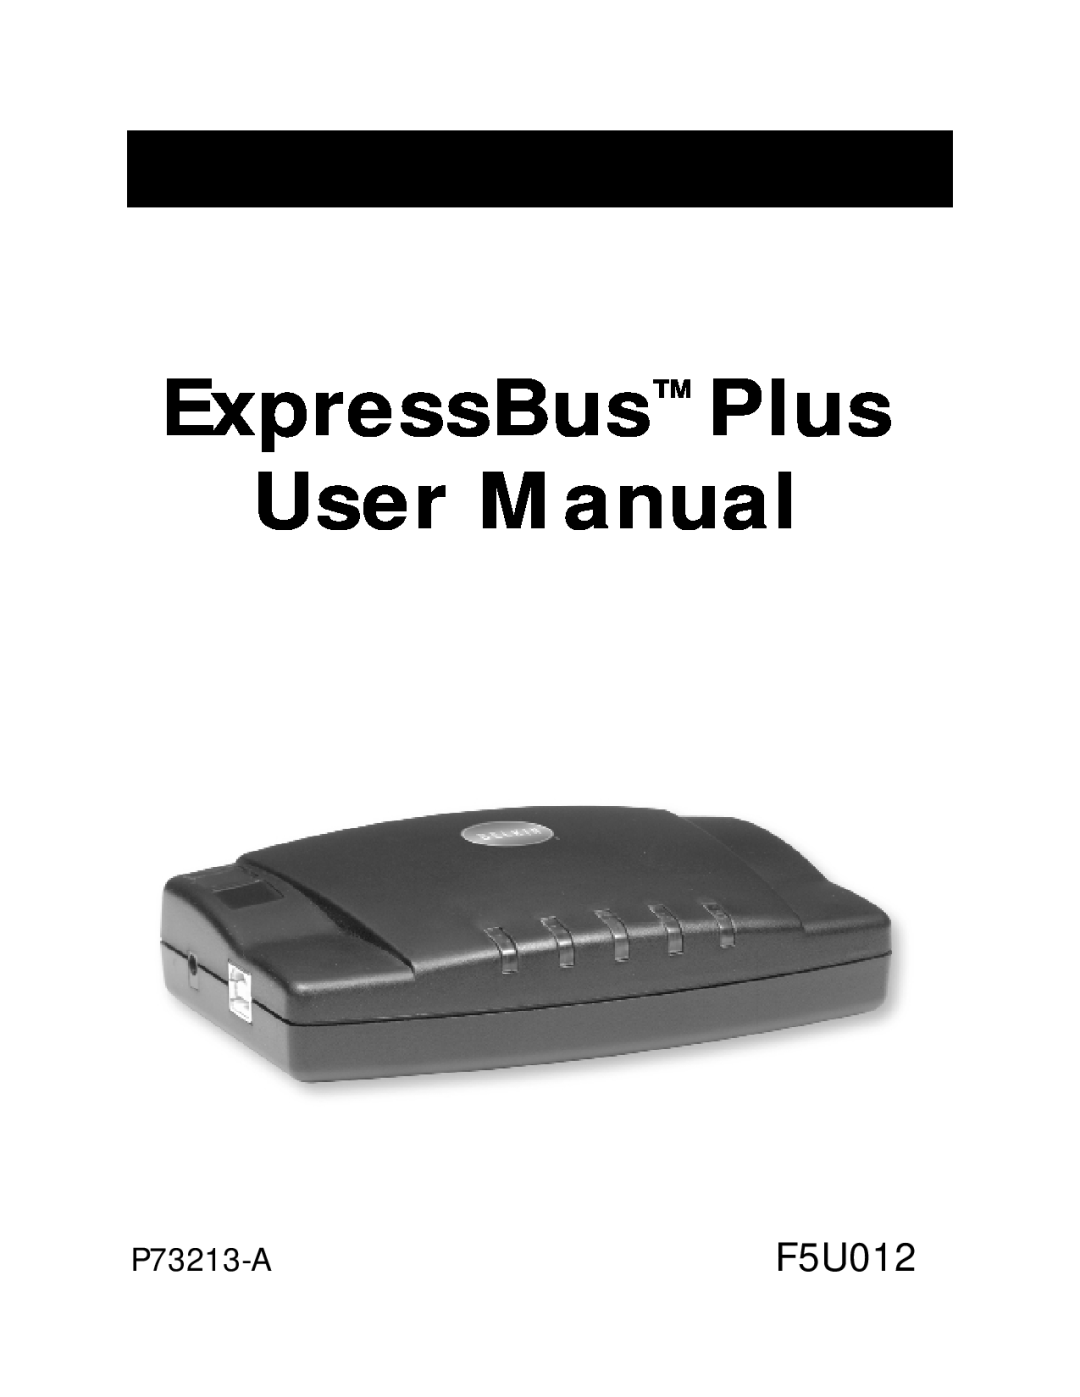 Belkin P73213-A user manual ExpressBus Plus User Manual, F5U012 